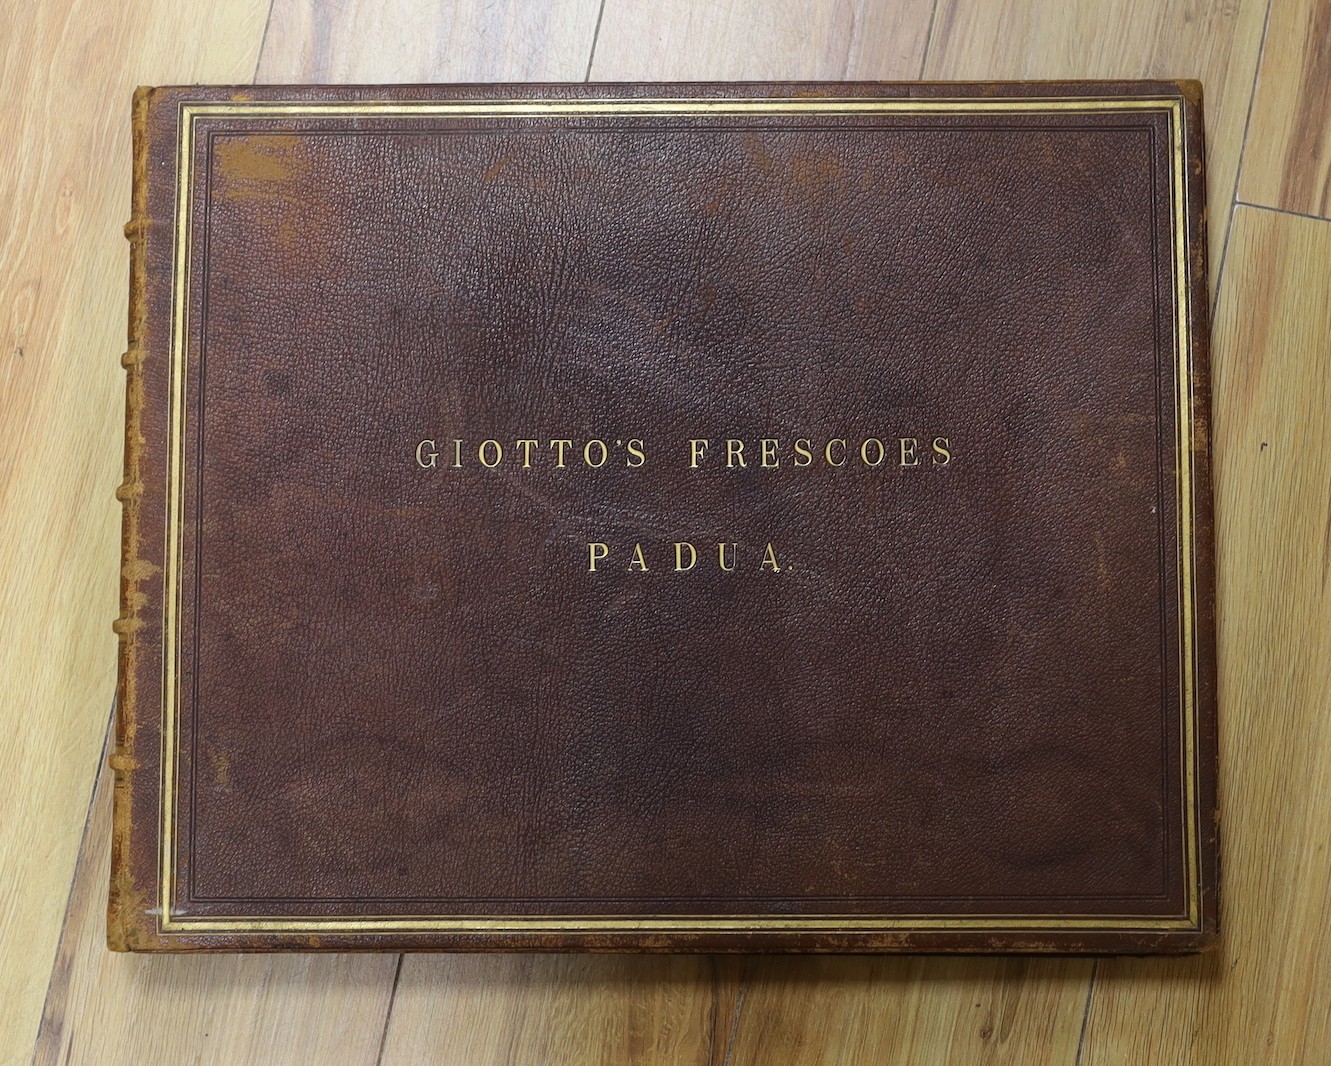 Giotto’s Frescoes, Padua, leather bound volume, 50 cms x 40 cms